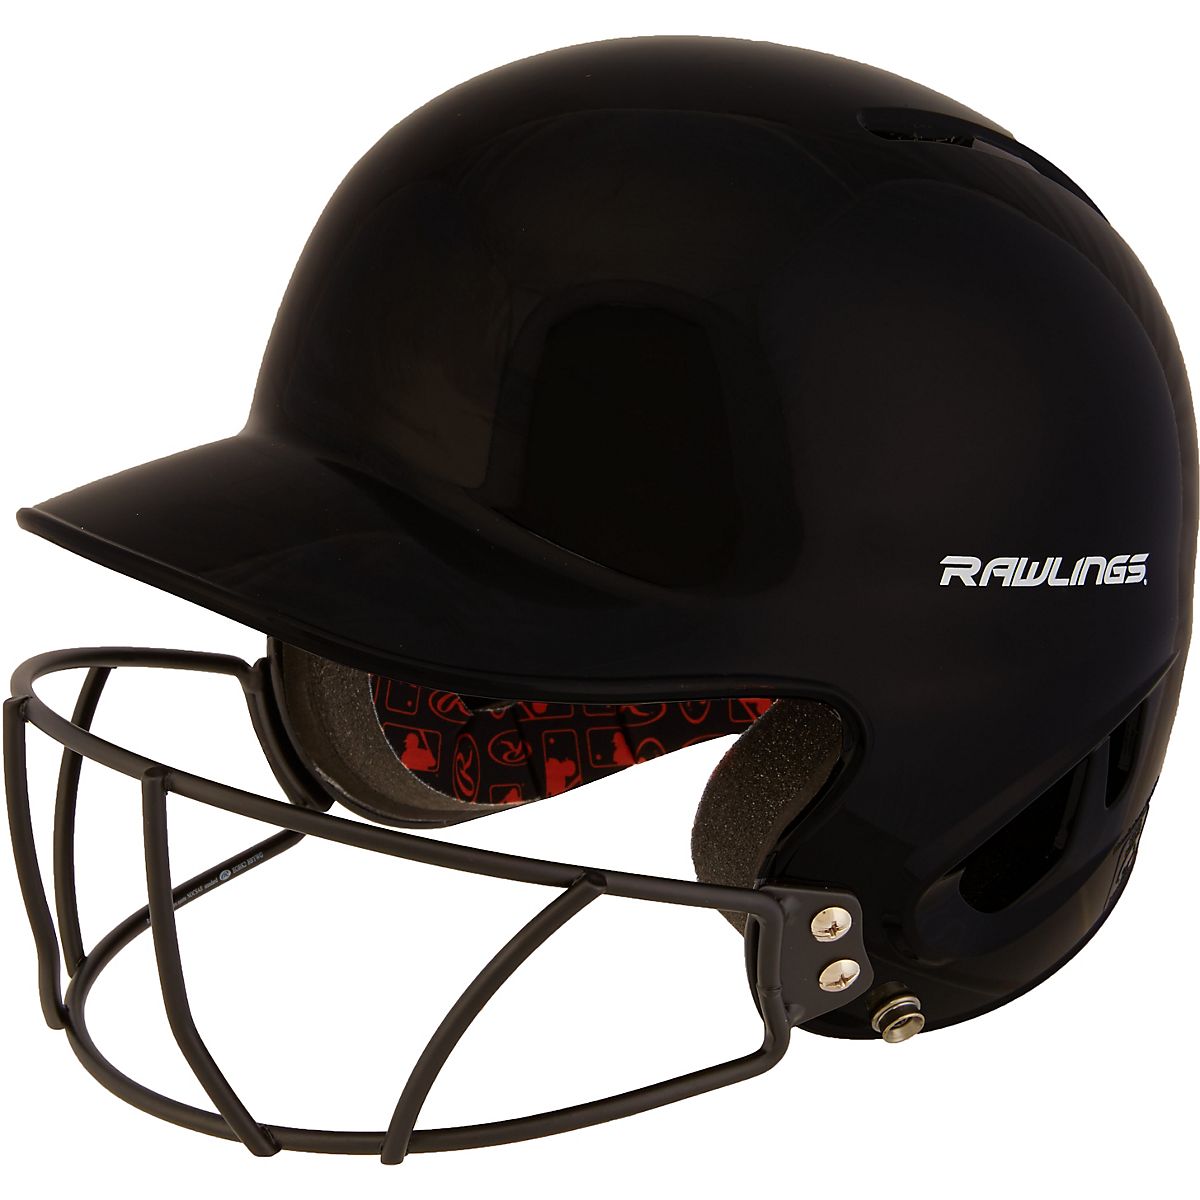 Details about   Rawlings Boys Youth T ball Baseball Girls Softball Batting helmet face guard 